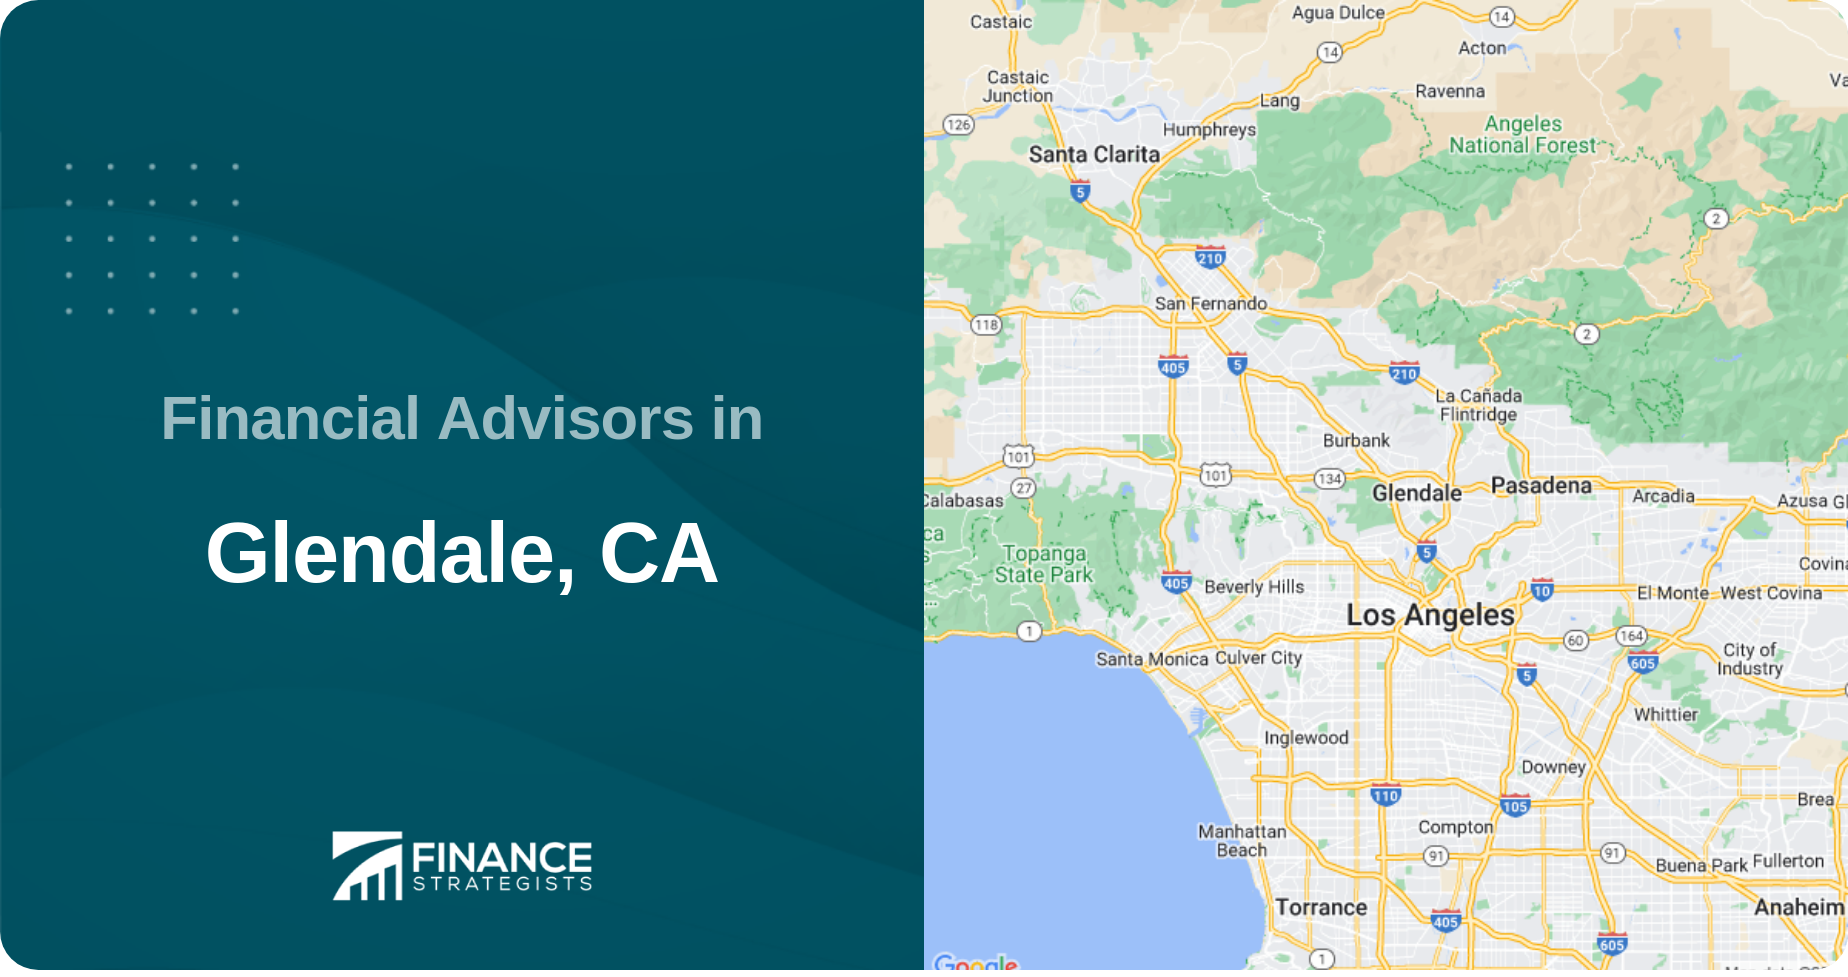 Financial Advisors in Glendale, CA